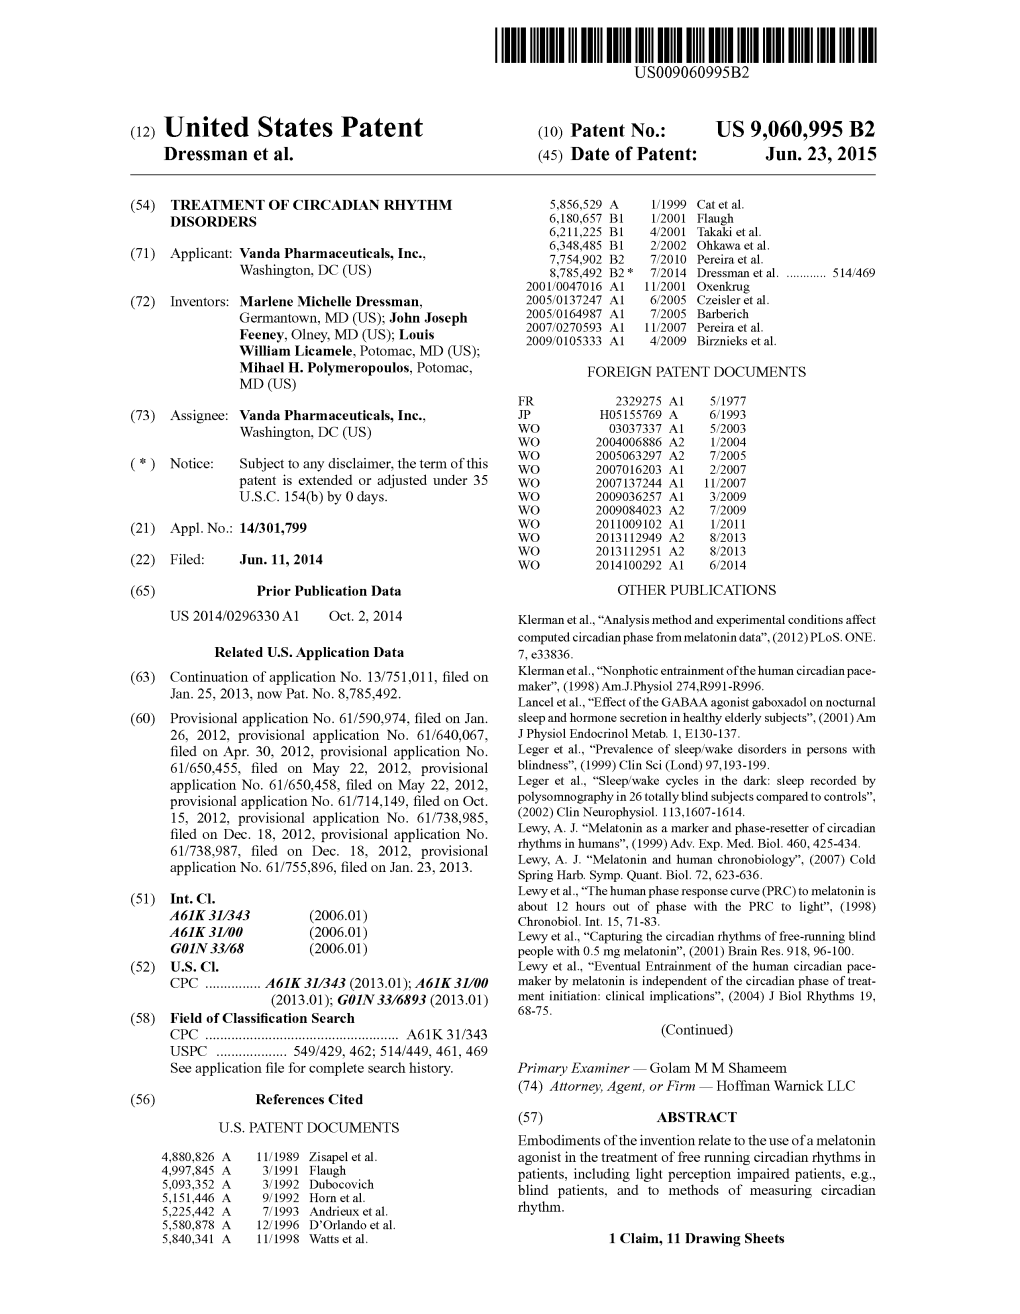 (12) United States Patent (10) Patent No.: US 9,060,995 B2 Dressman Et Al